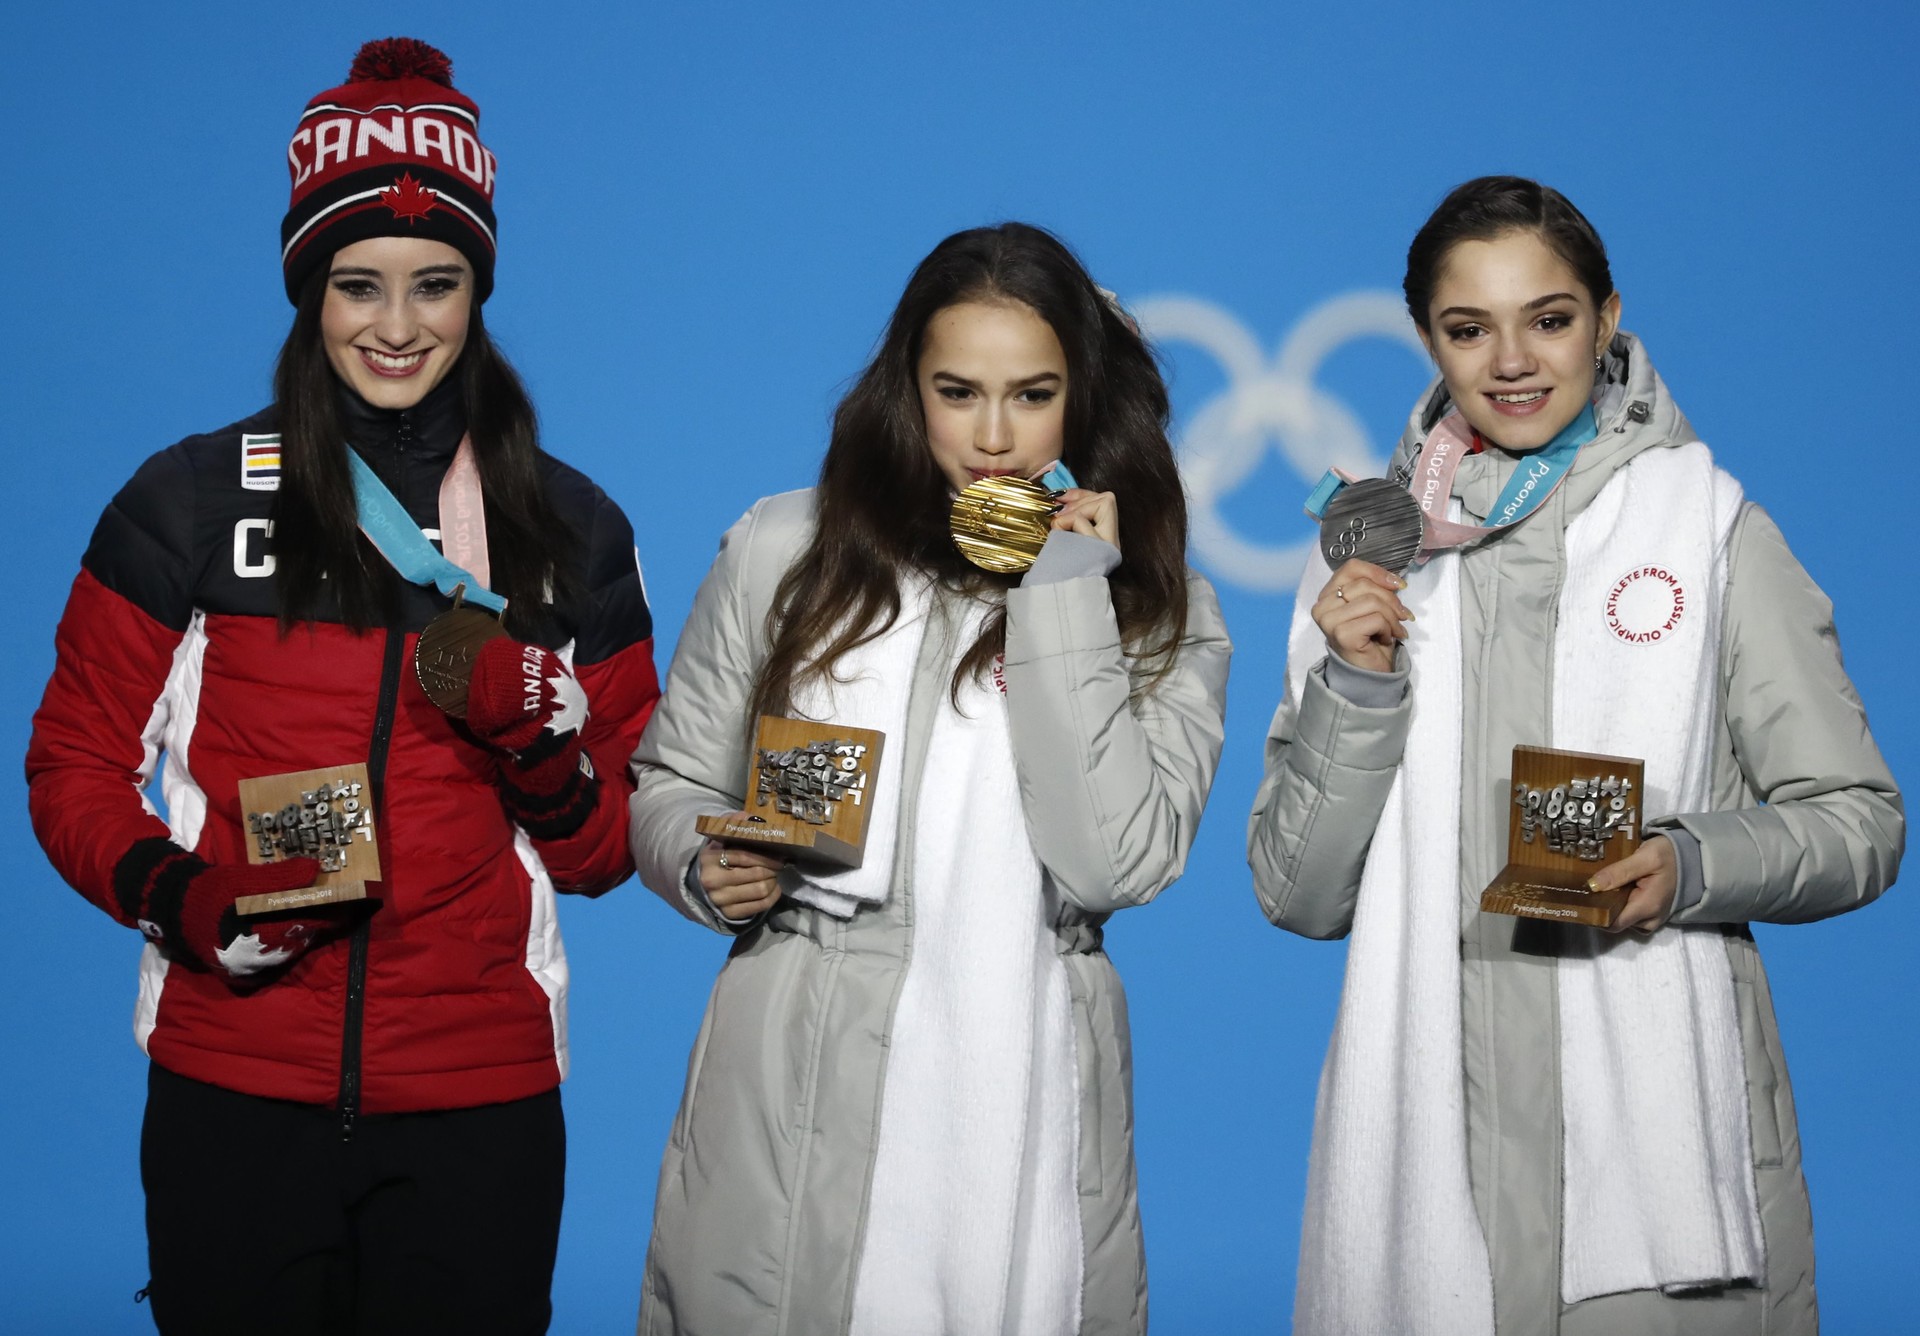 Sur la photo, Alina Zagitova, Evgenia Medvedeva et la Canadienne Kaetlyn Osmond, ce trio qui a occipé les trois marches du podium.